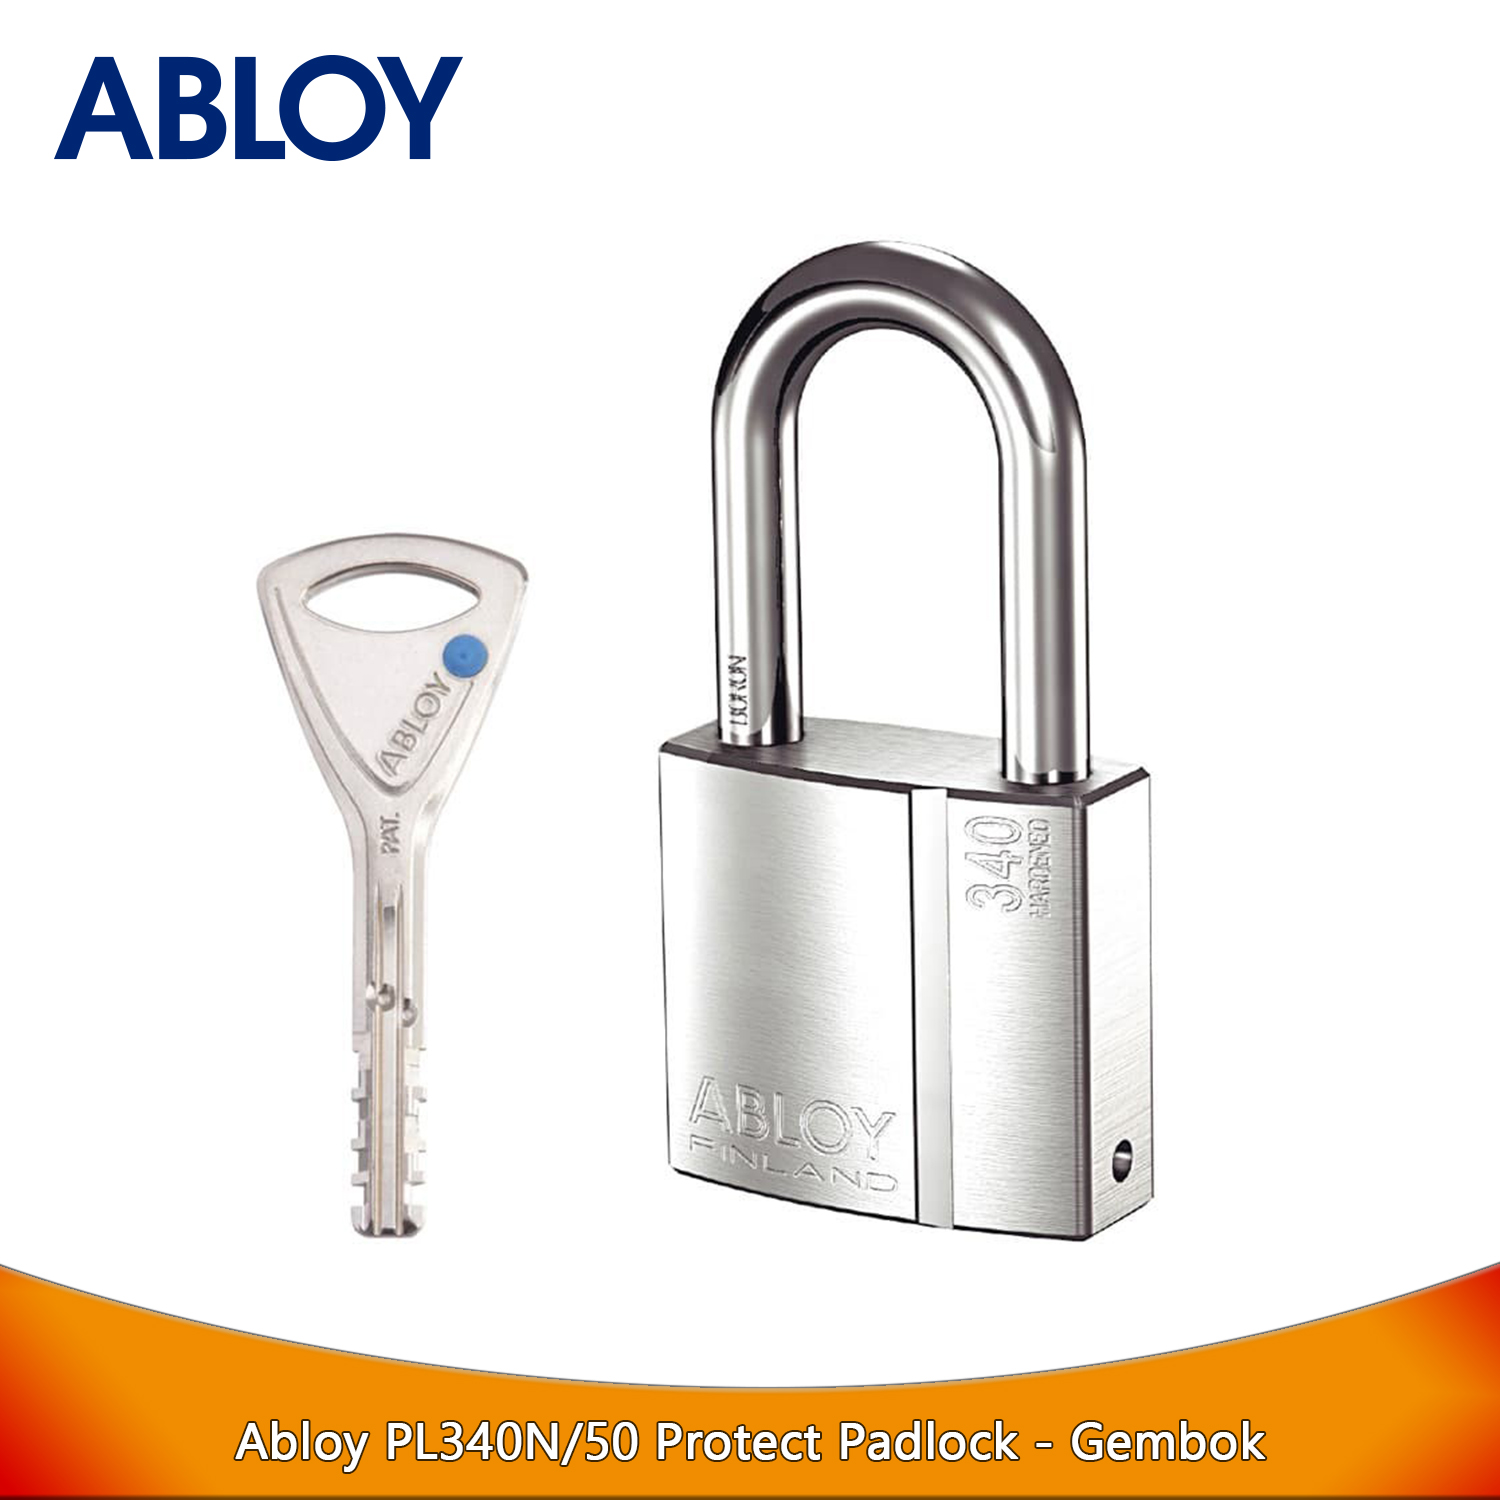 Abloy PL340N/50 Protect Padlock - Gembok